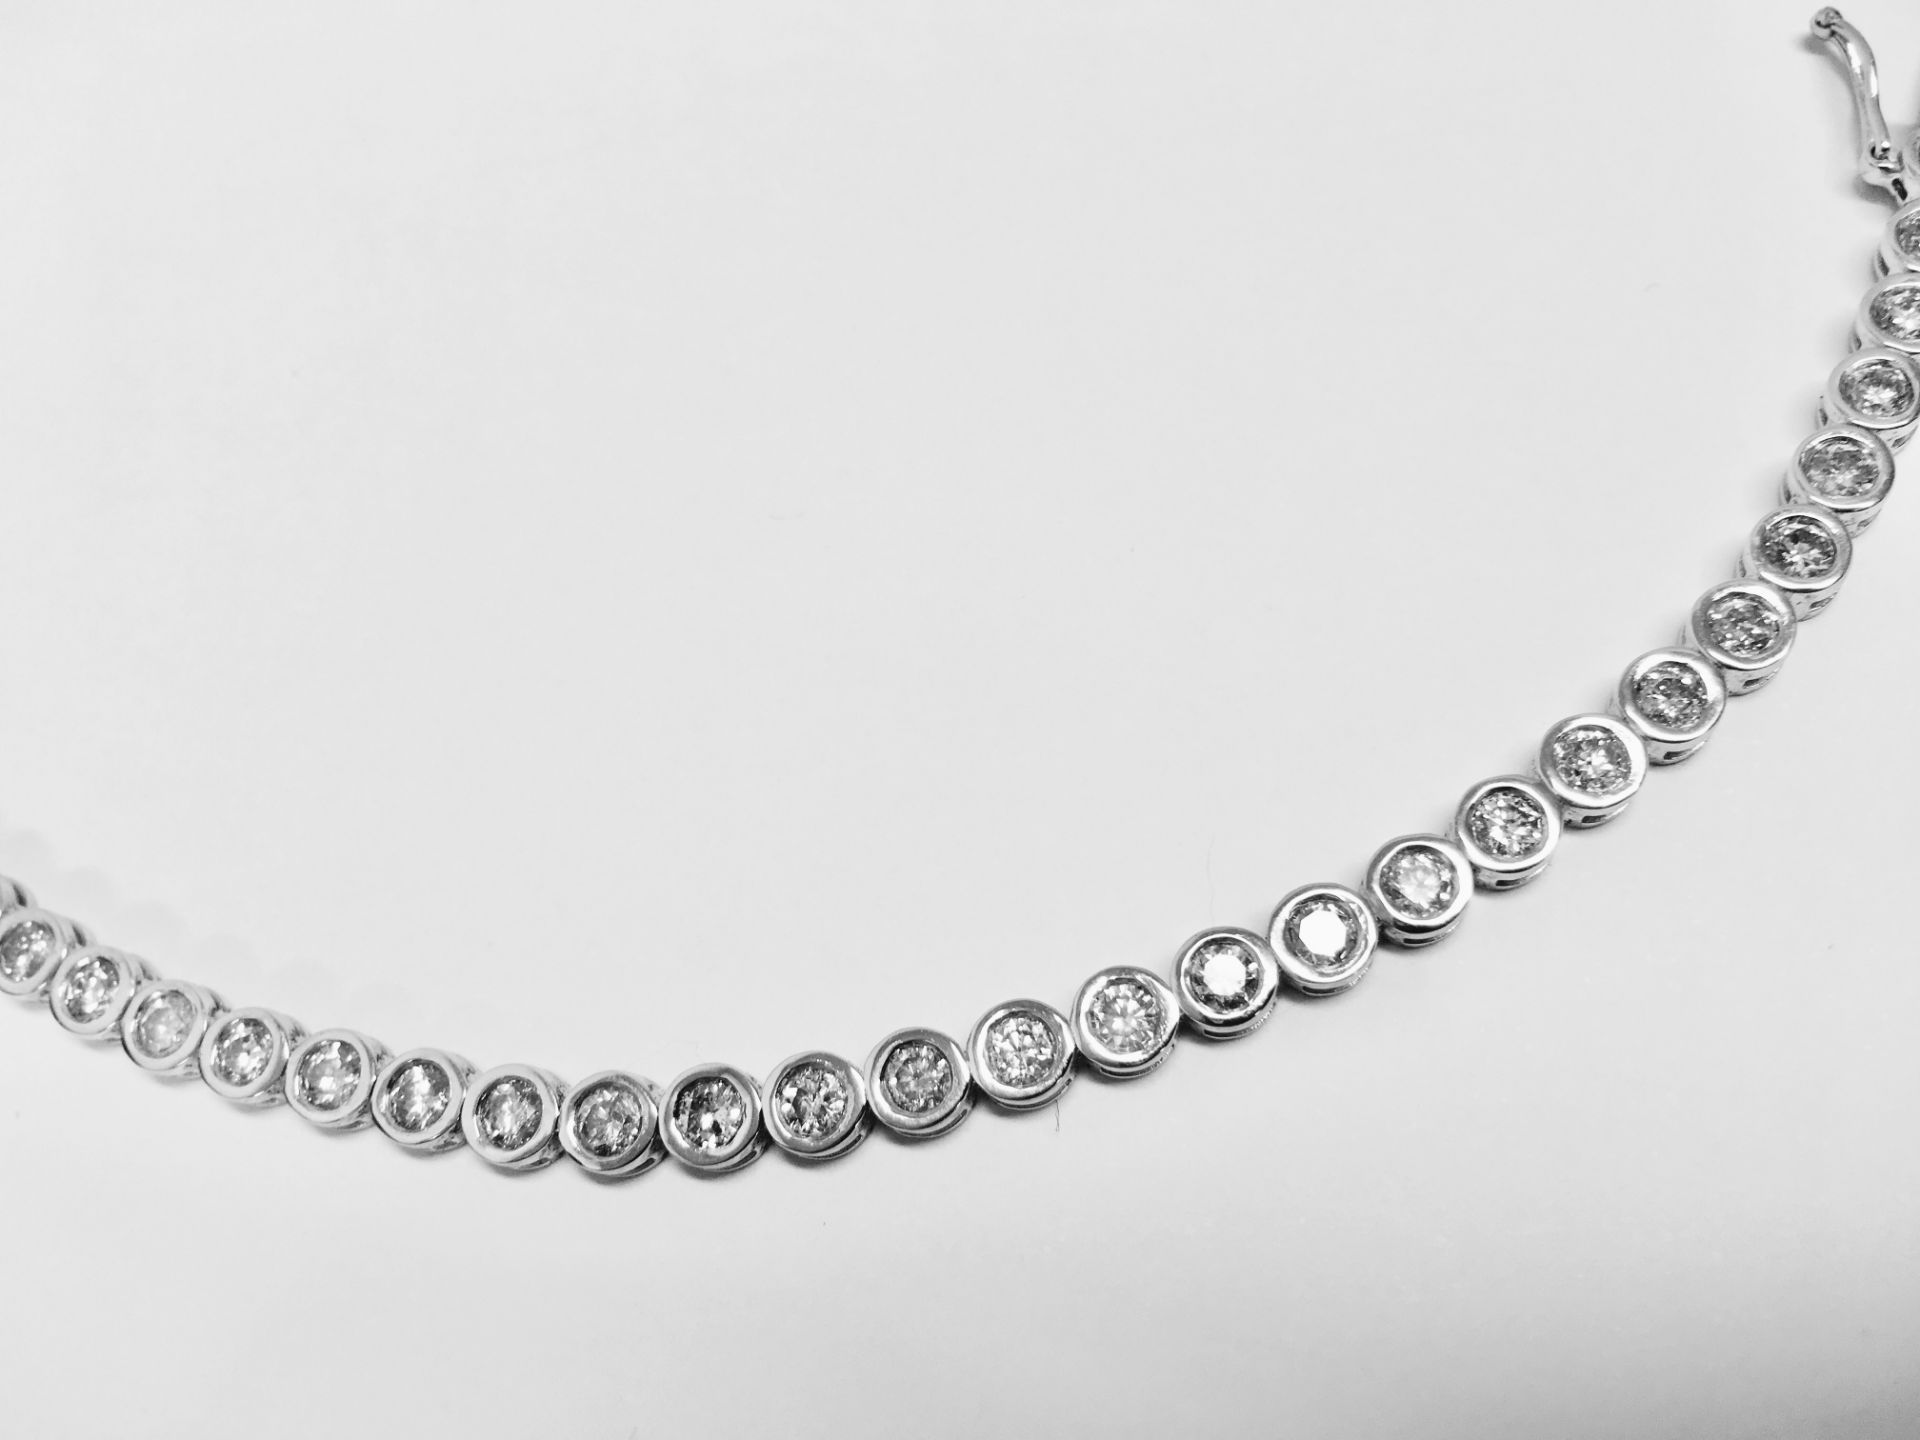 5.60Ct Diamond Tennis Style Bracelet Set With Brilliant Cut Diamonds,  I Colour, Si3 Clarity. - Image 18 of 25